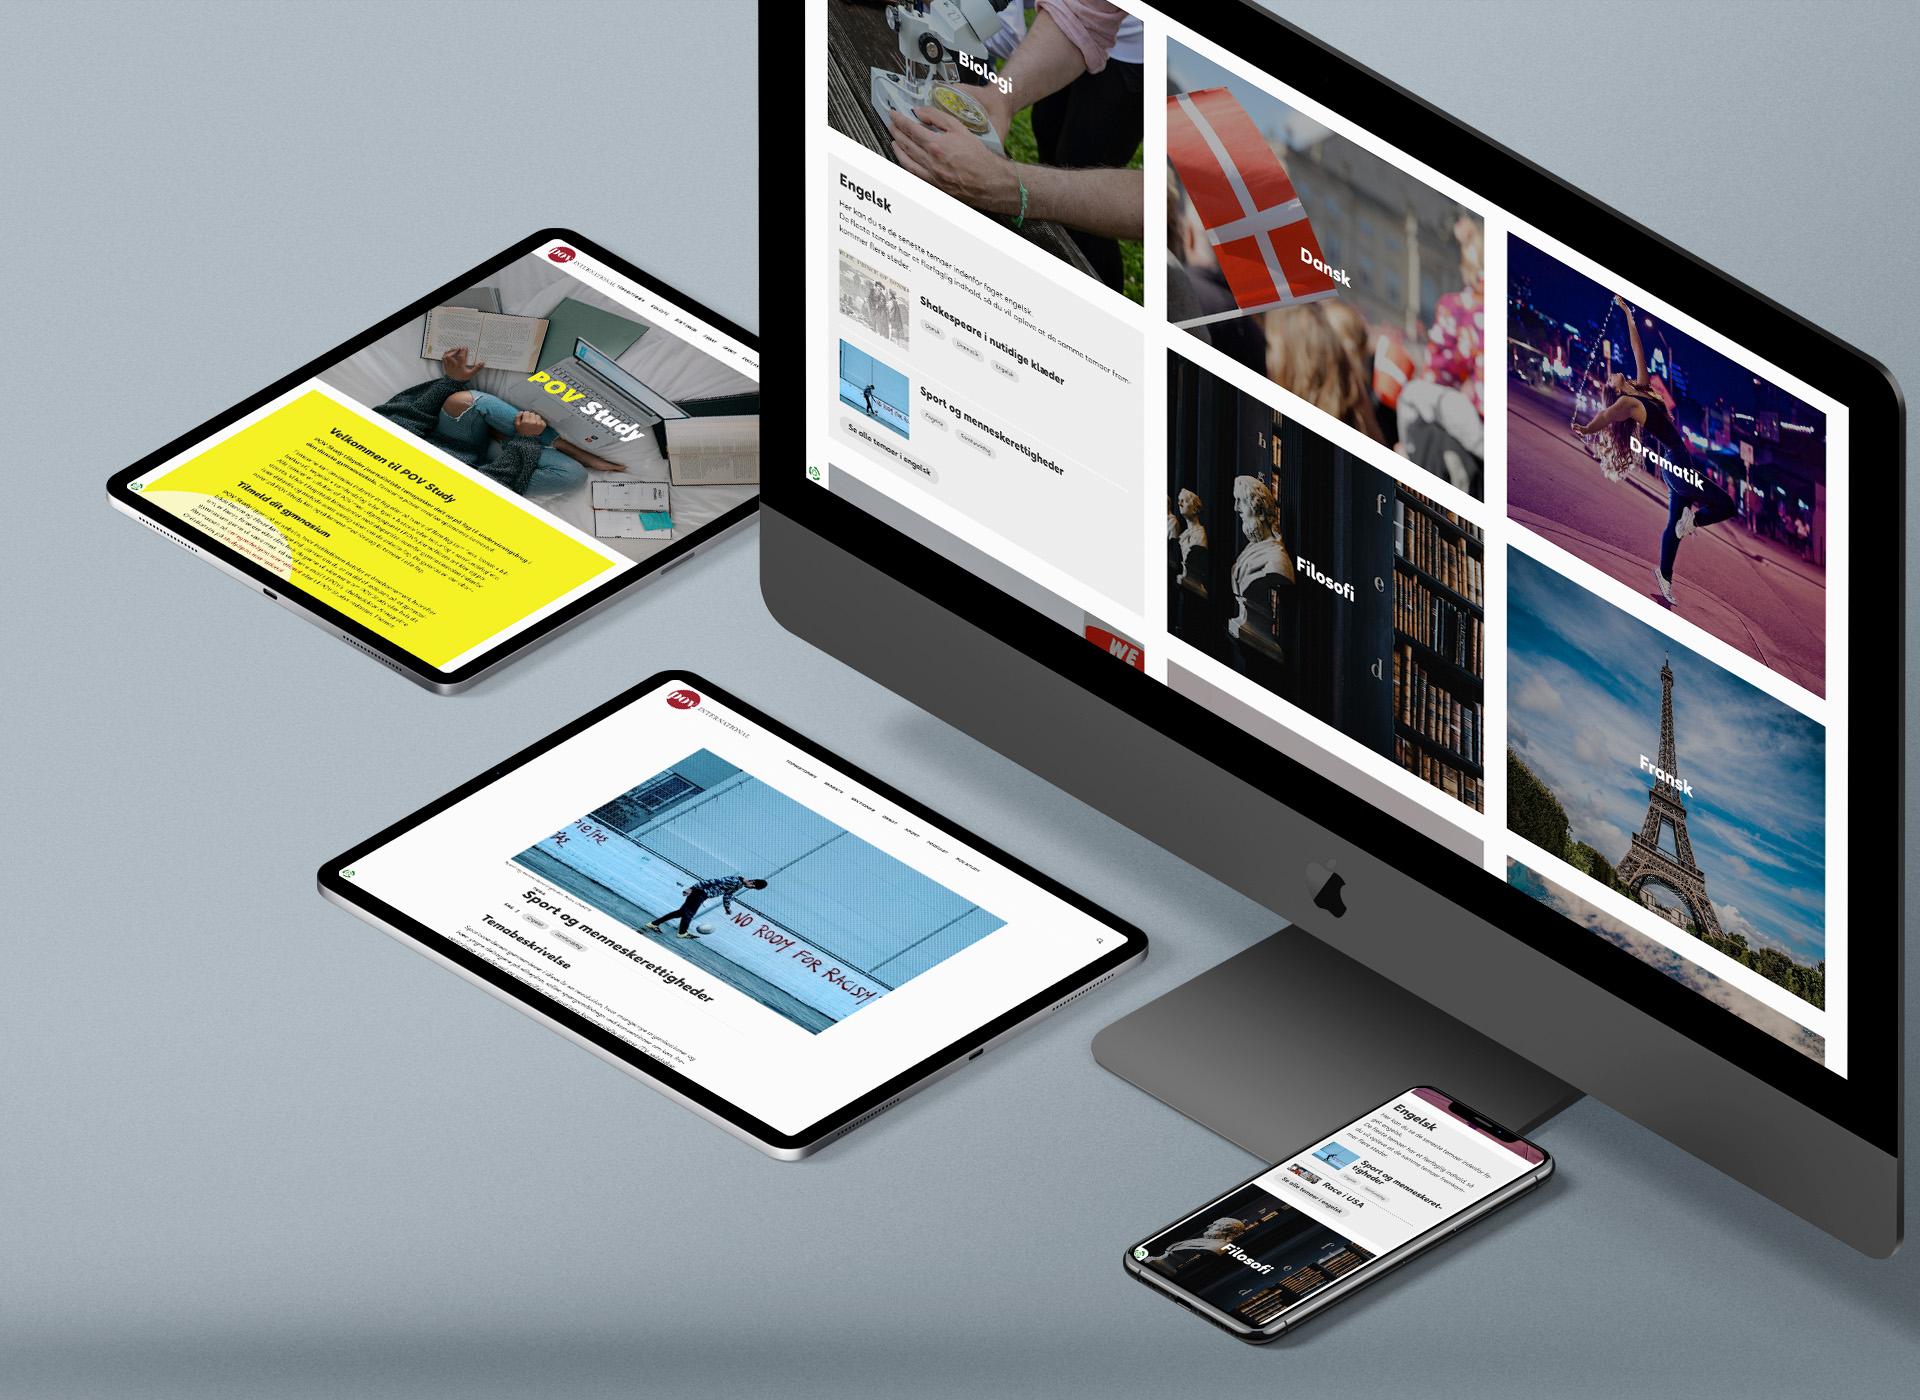 POV Study on iMac, iPad and iPhone